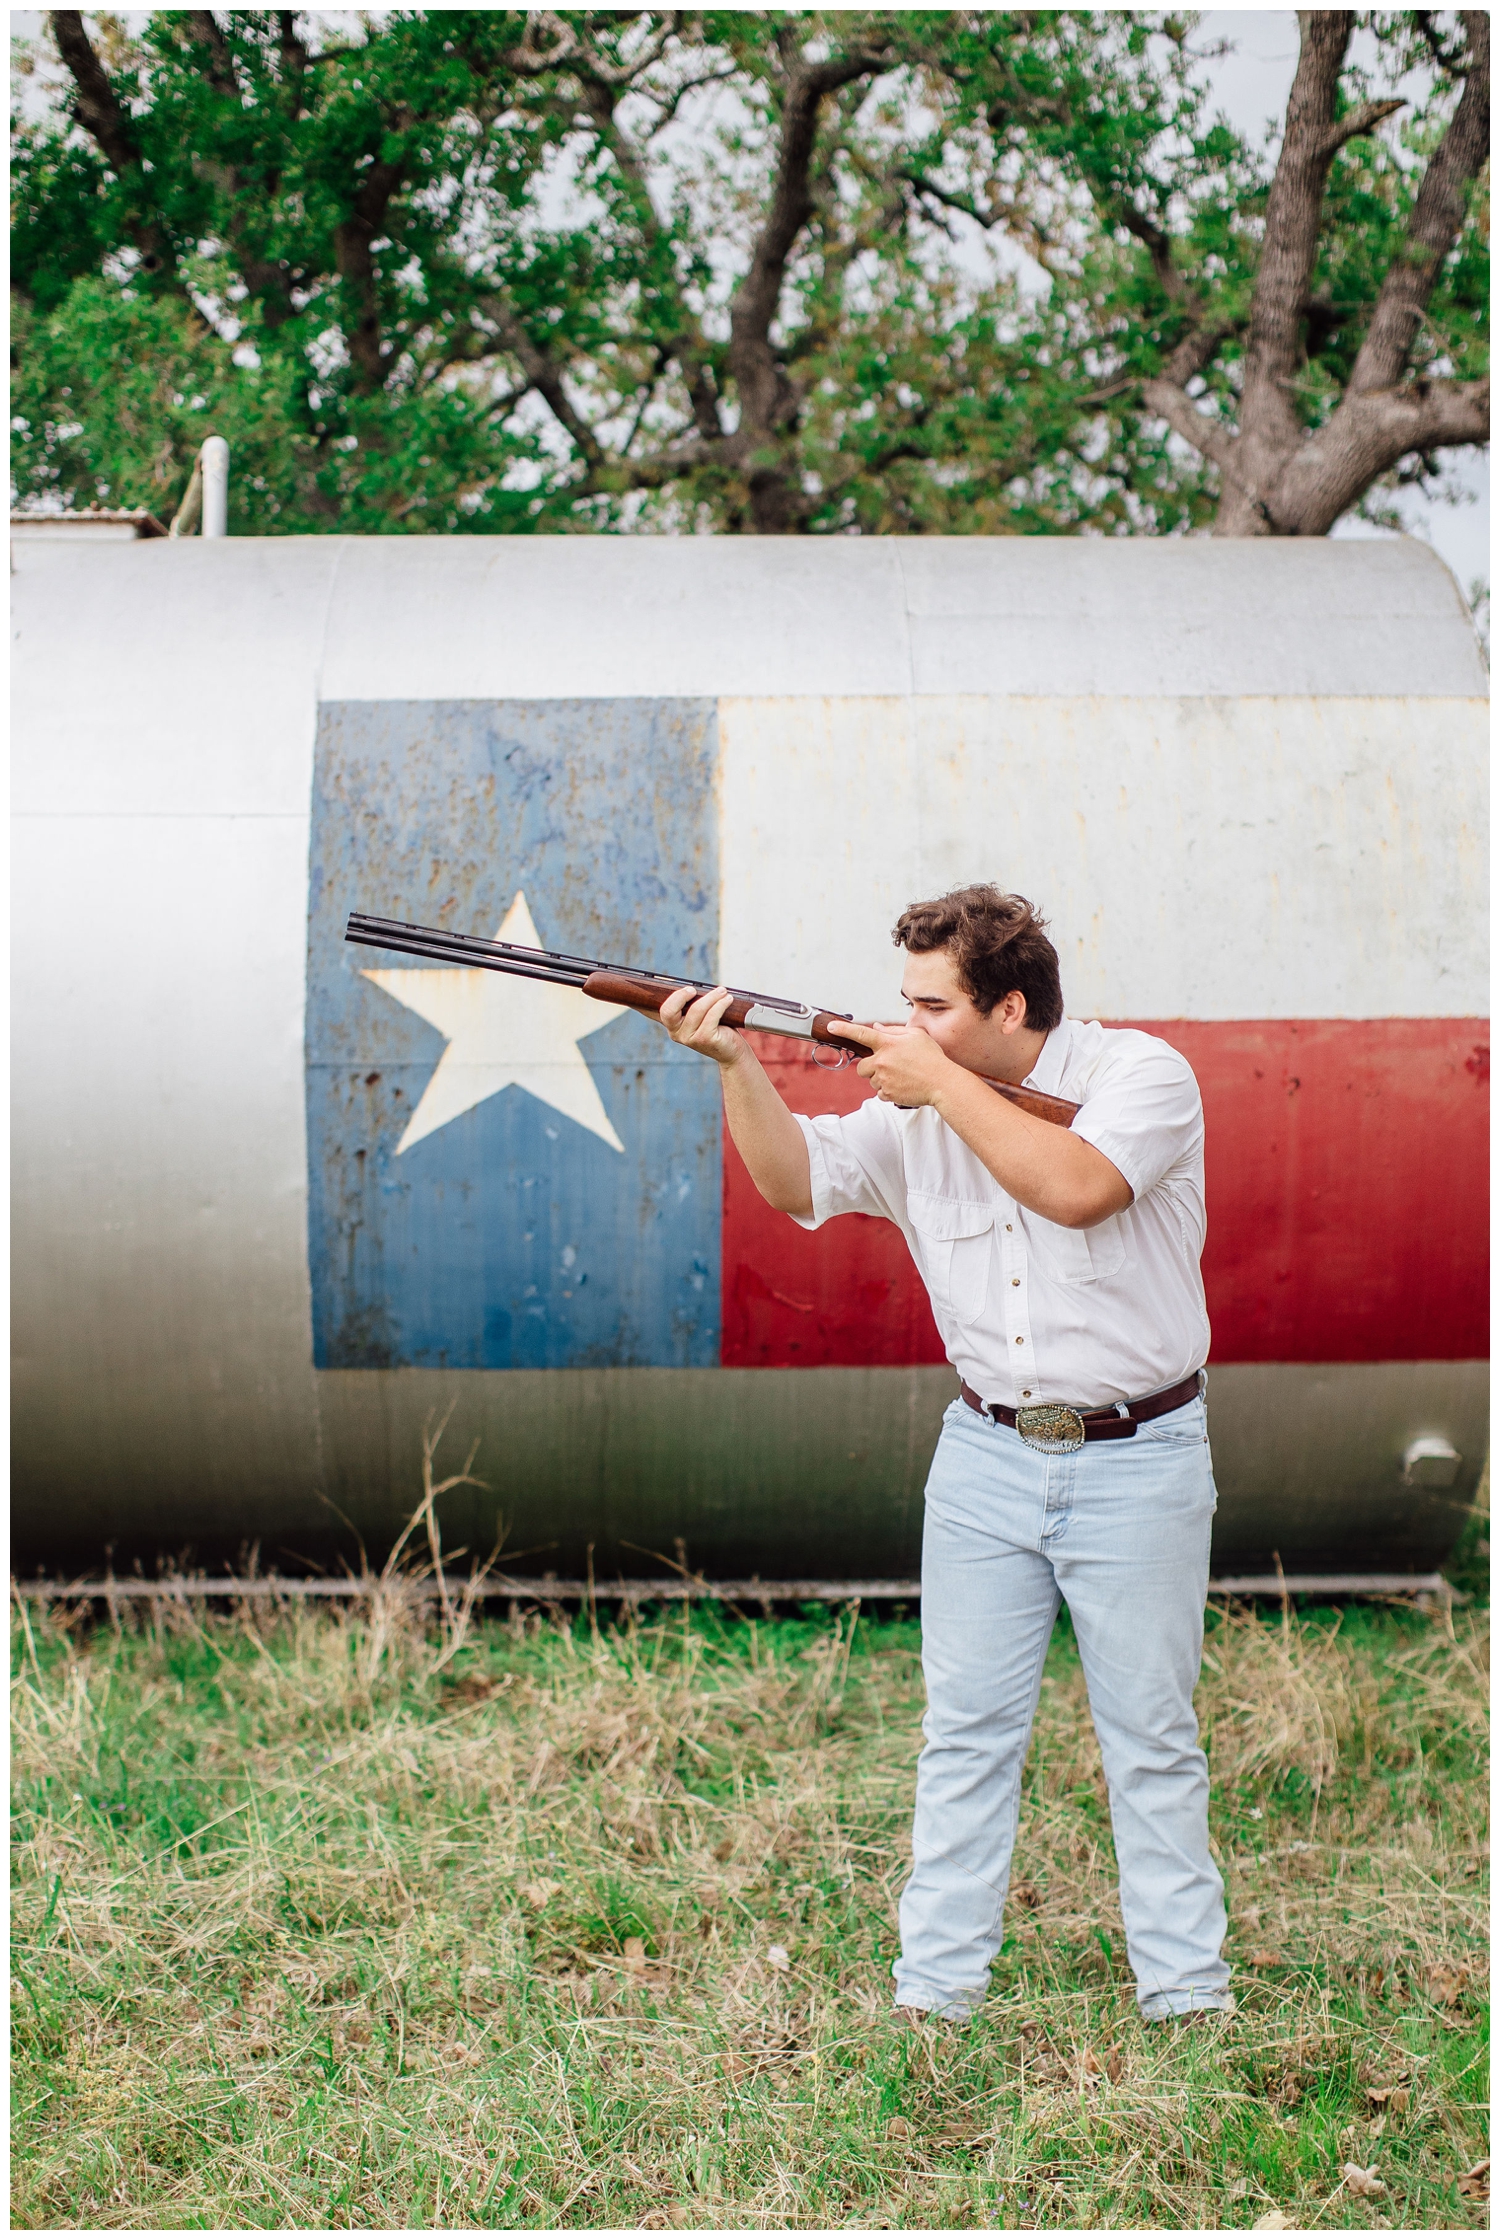 Houston high school senior guy holding rifle in field